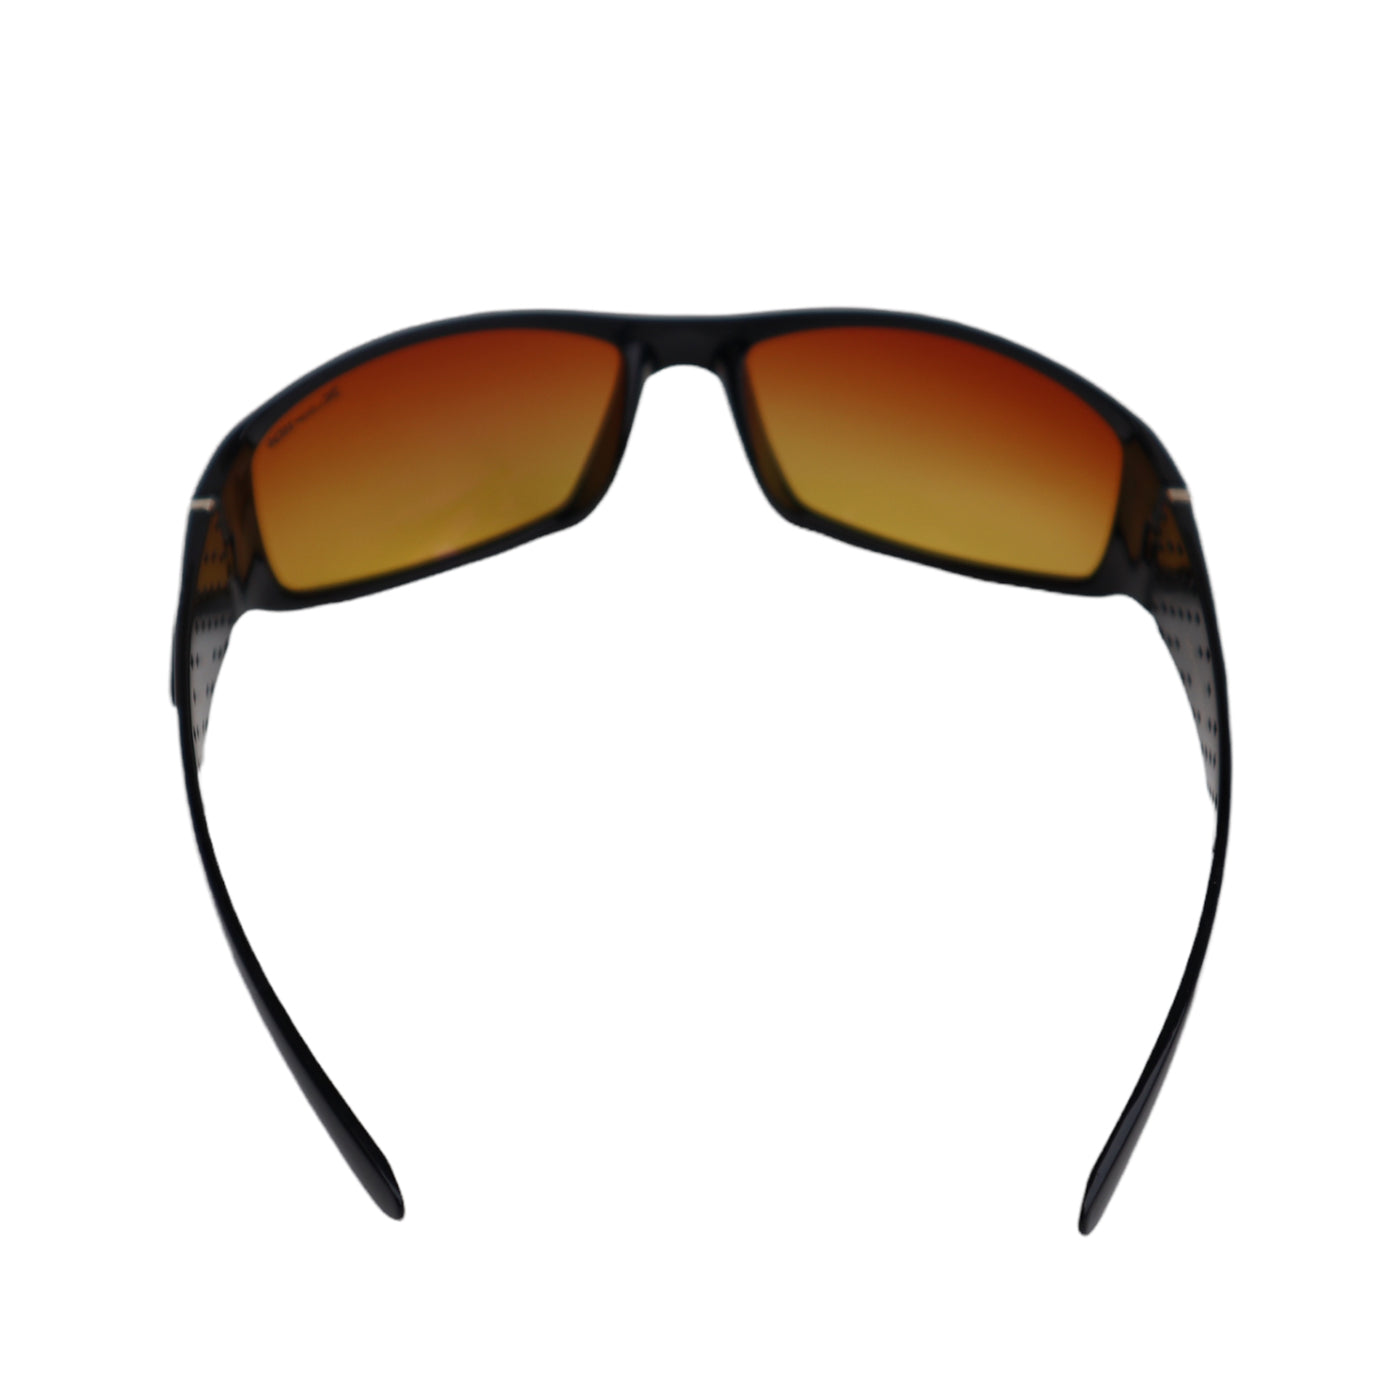 X-LOOP Designer Luxury High Definition Sunglasses Sports Frames BROWN lens